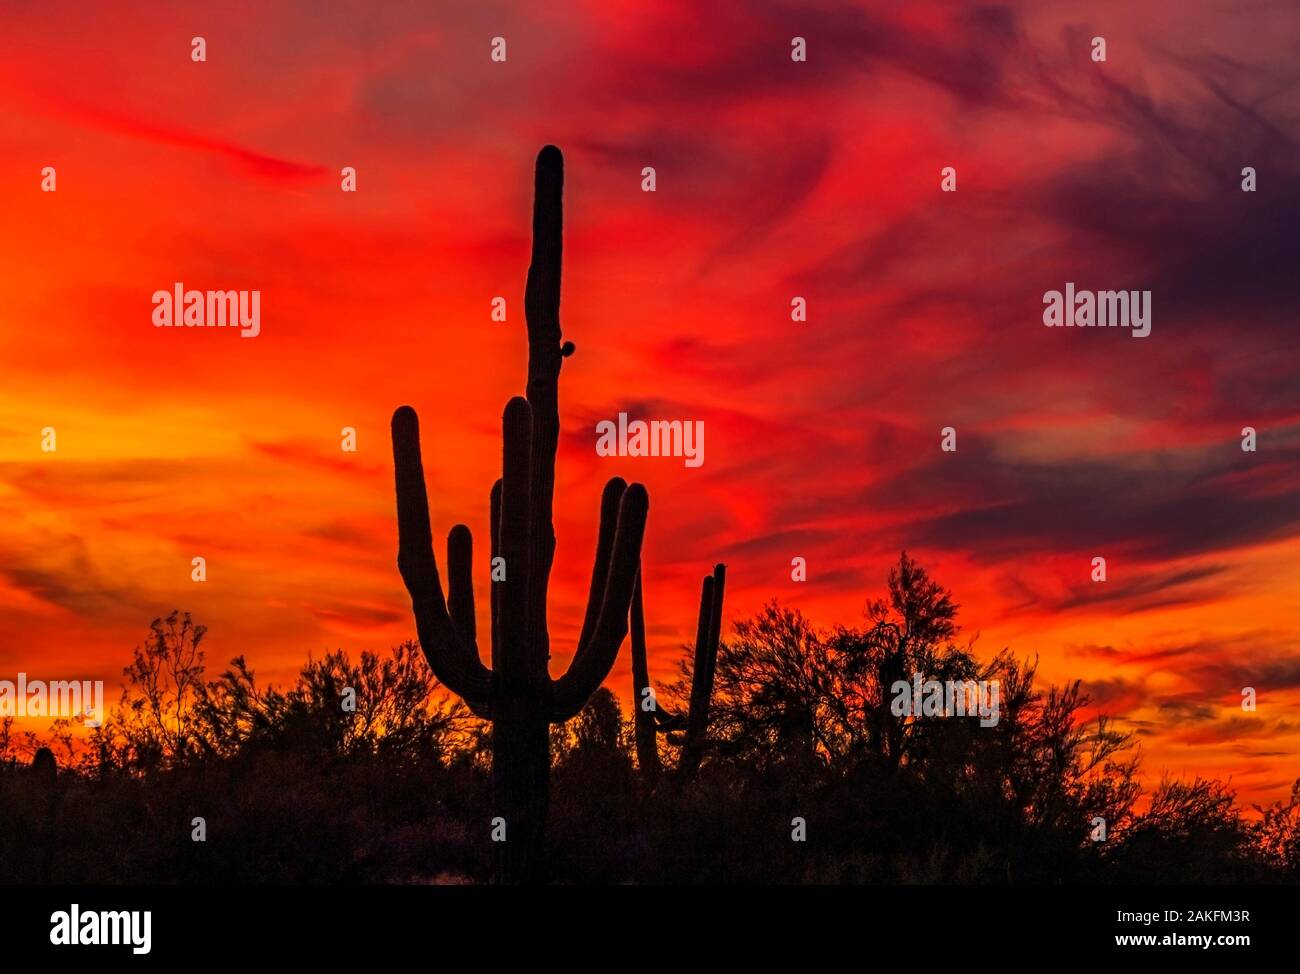 Pulsierende Blut rote Wüste in Arizona Sonnenaufgang Landschaft mit Saguaro Kaktus Silhouette Stockfoto